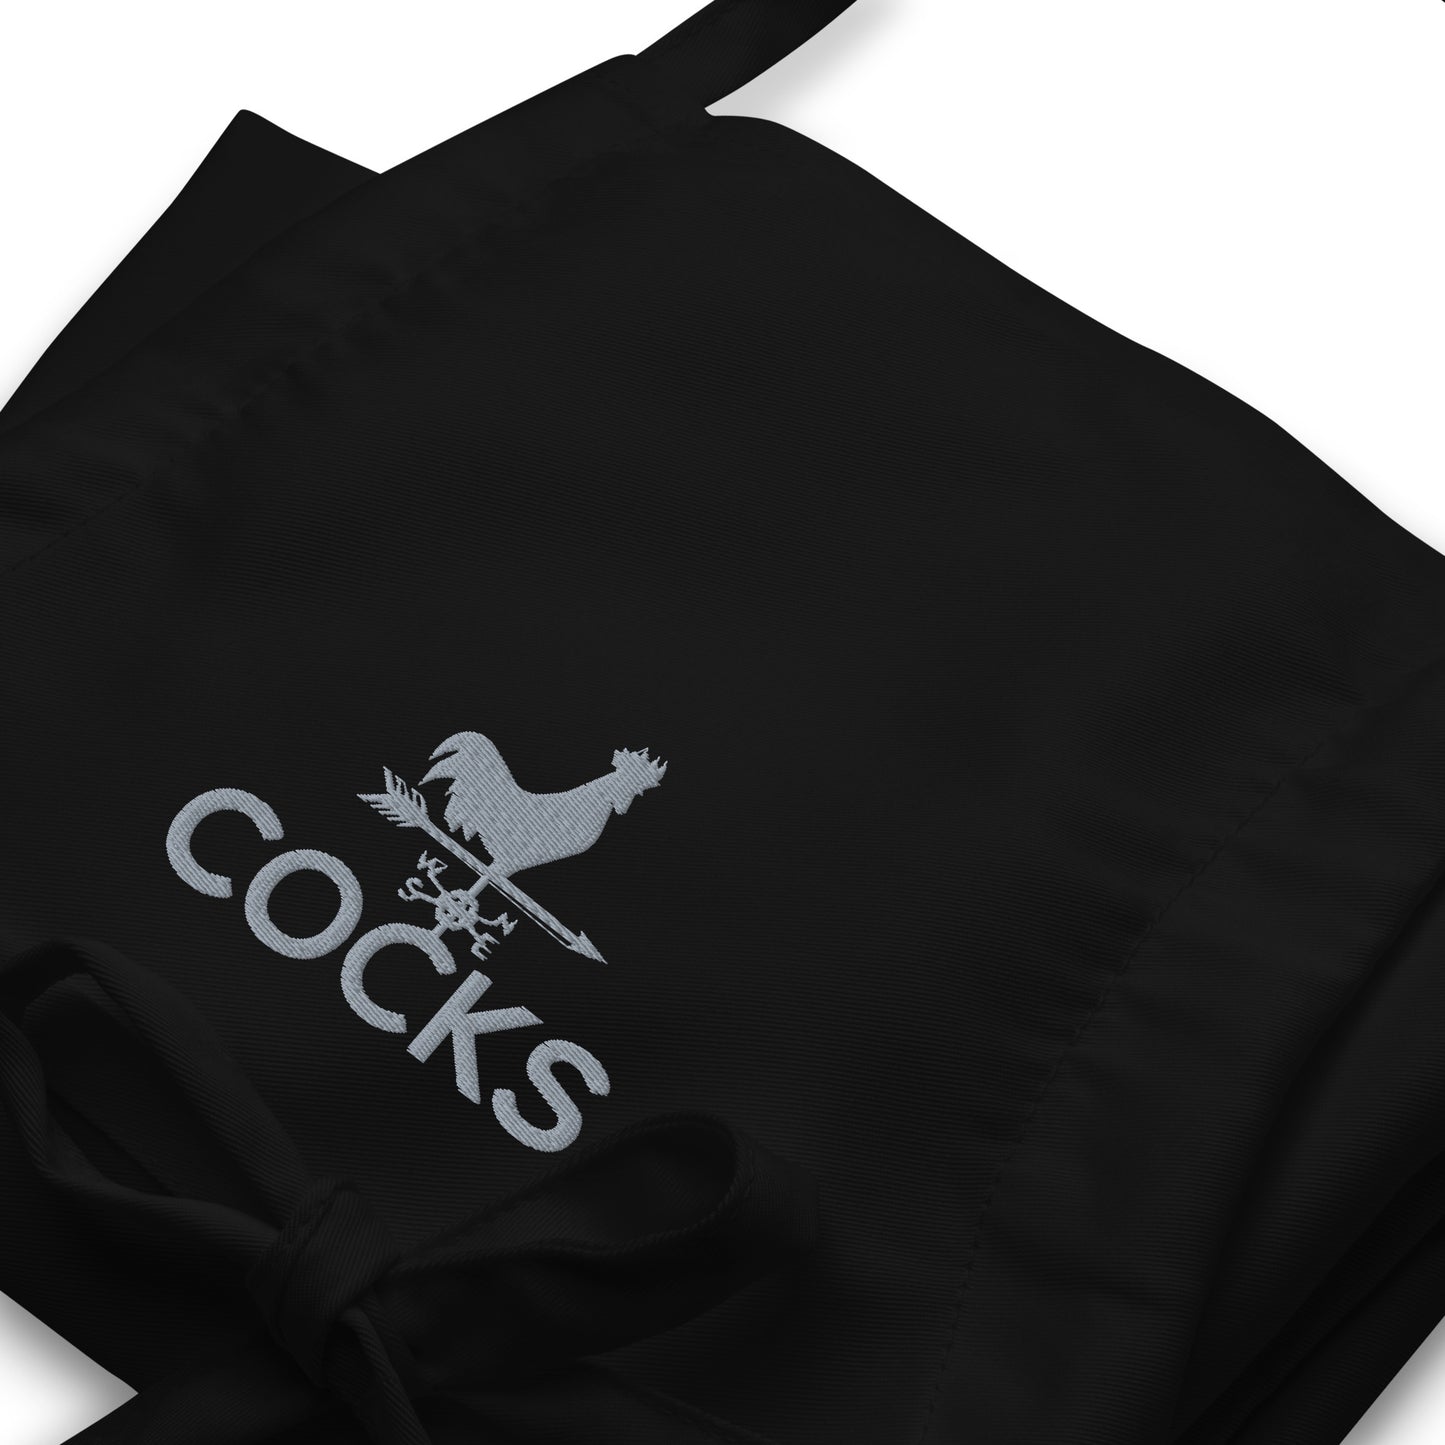 Cocks Embroidered Apron